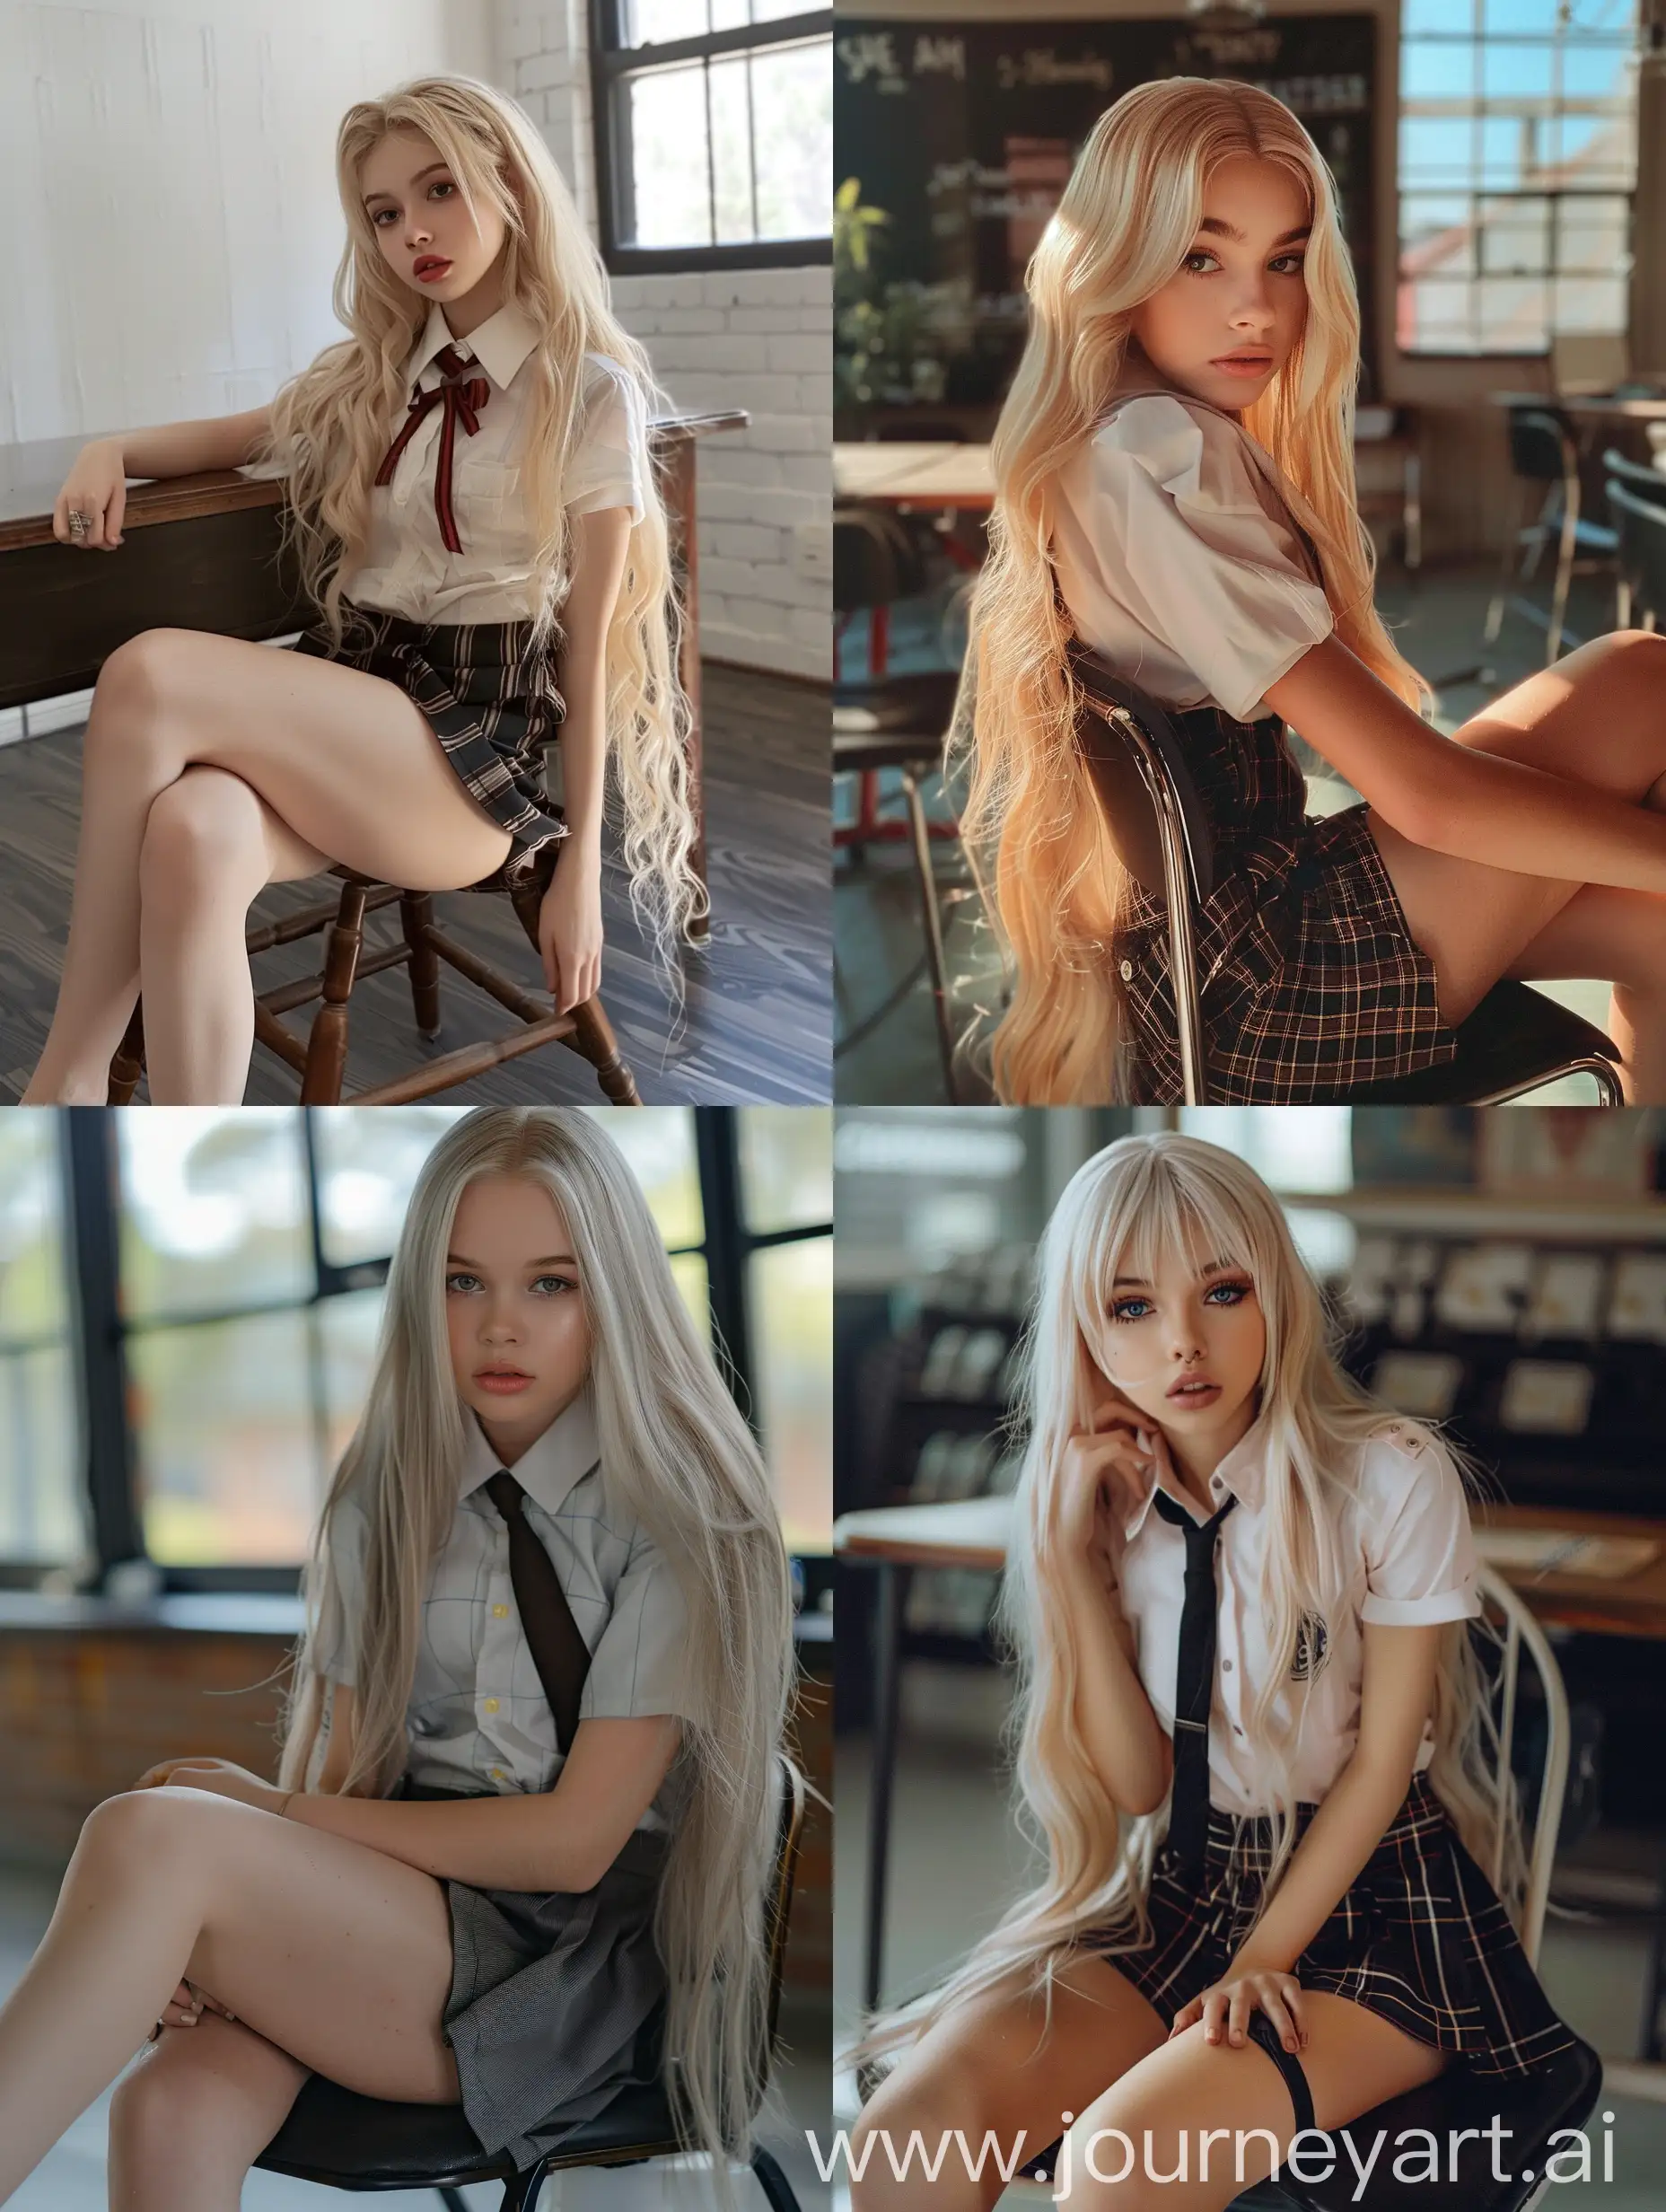 Stylish-Blonde-Influencer-Posing-in-School-Uniform-on-Chair